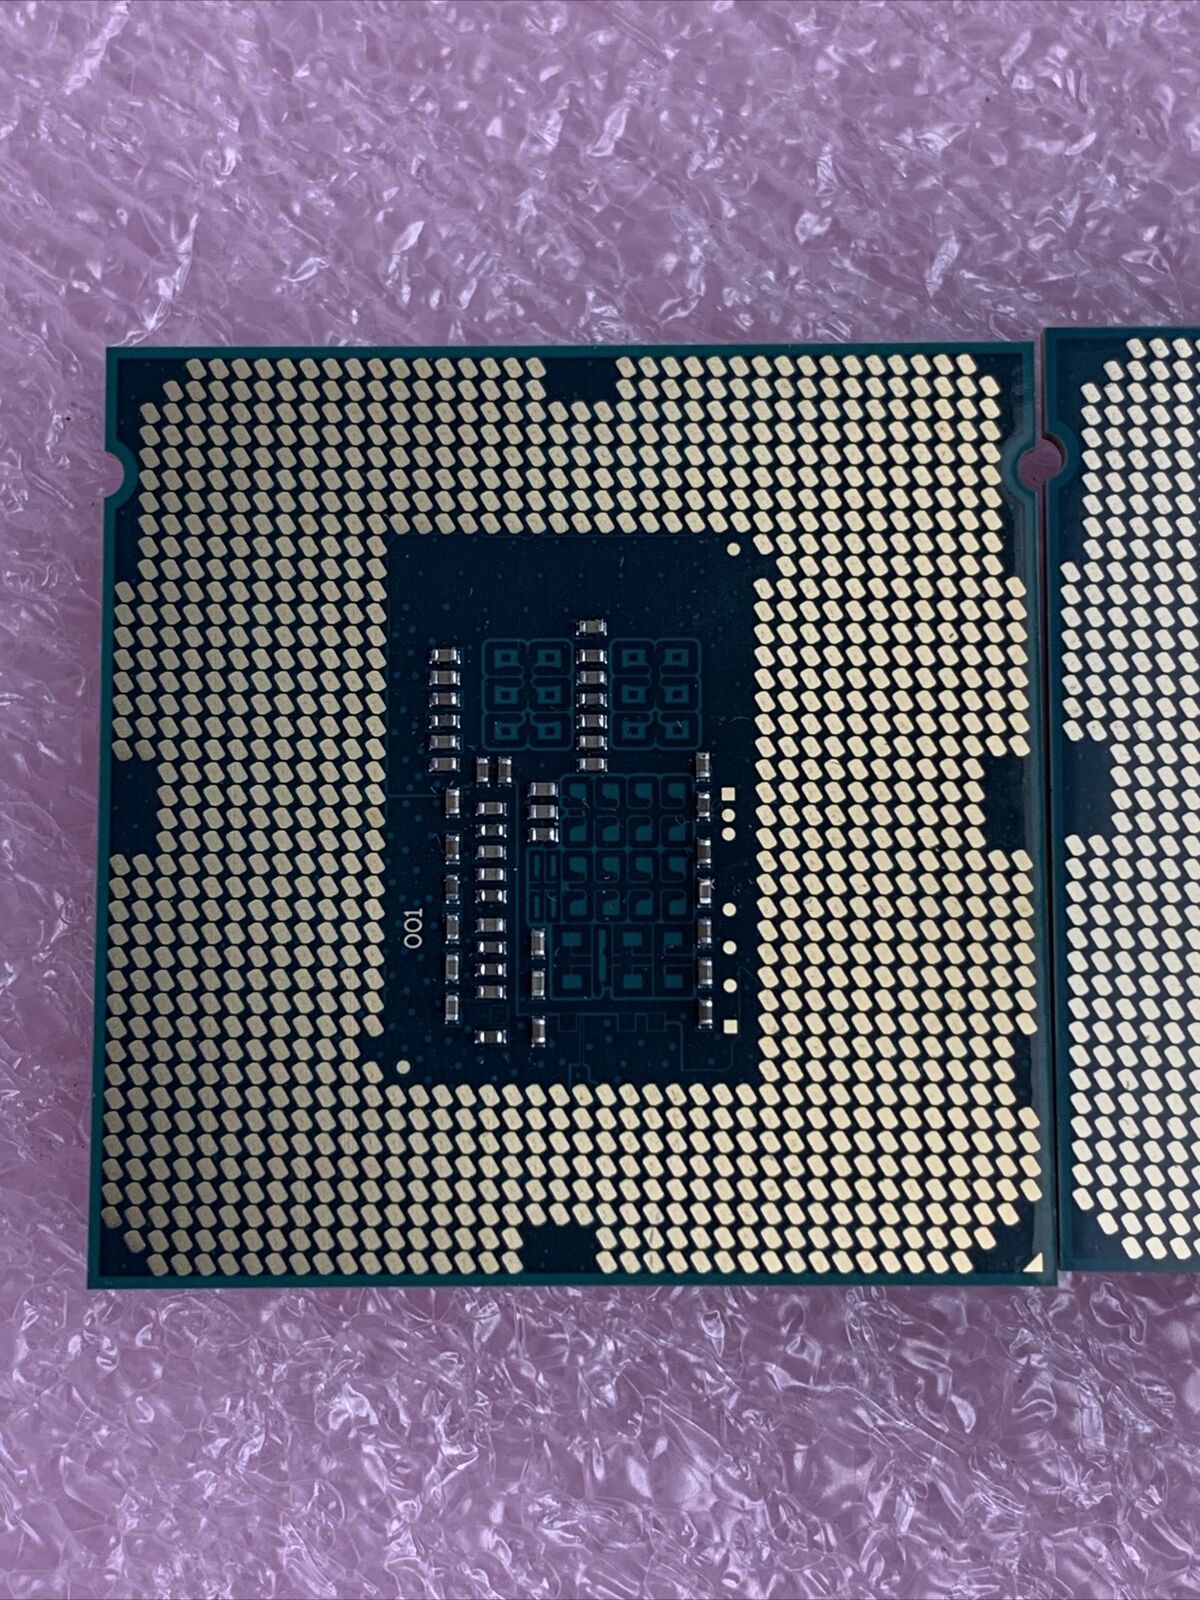 Lot of 2 intel Core i3-4160 SR1PK 3.6GHz Processors